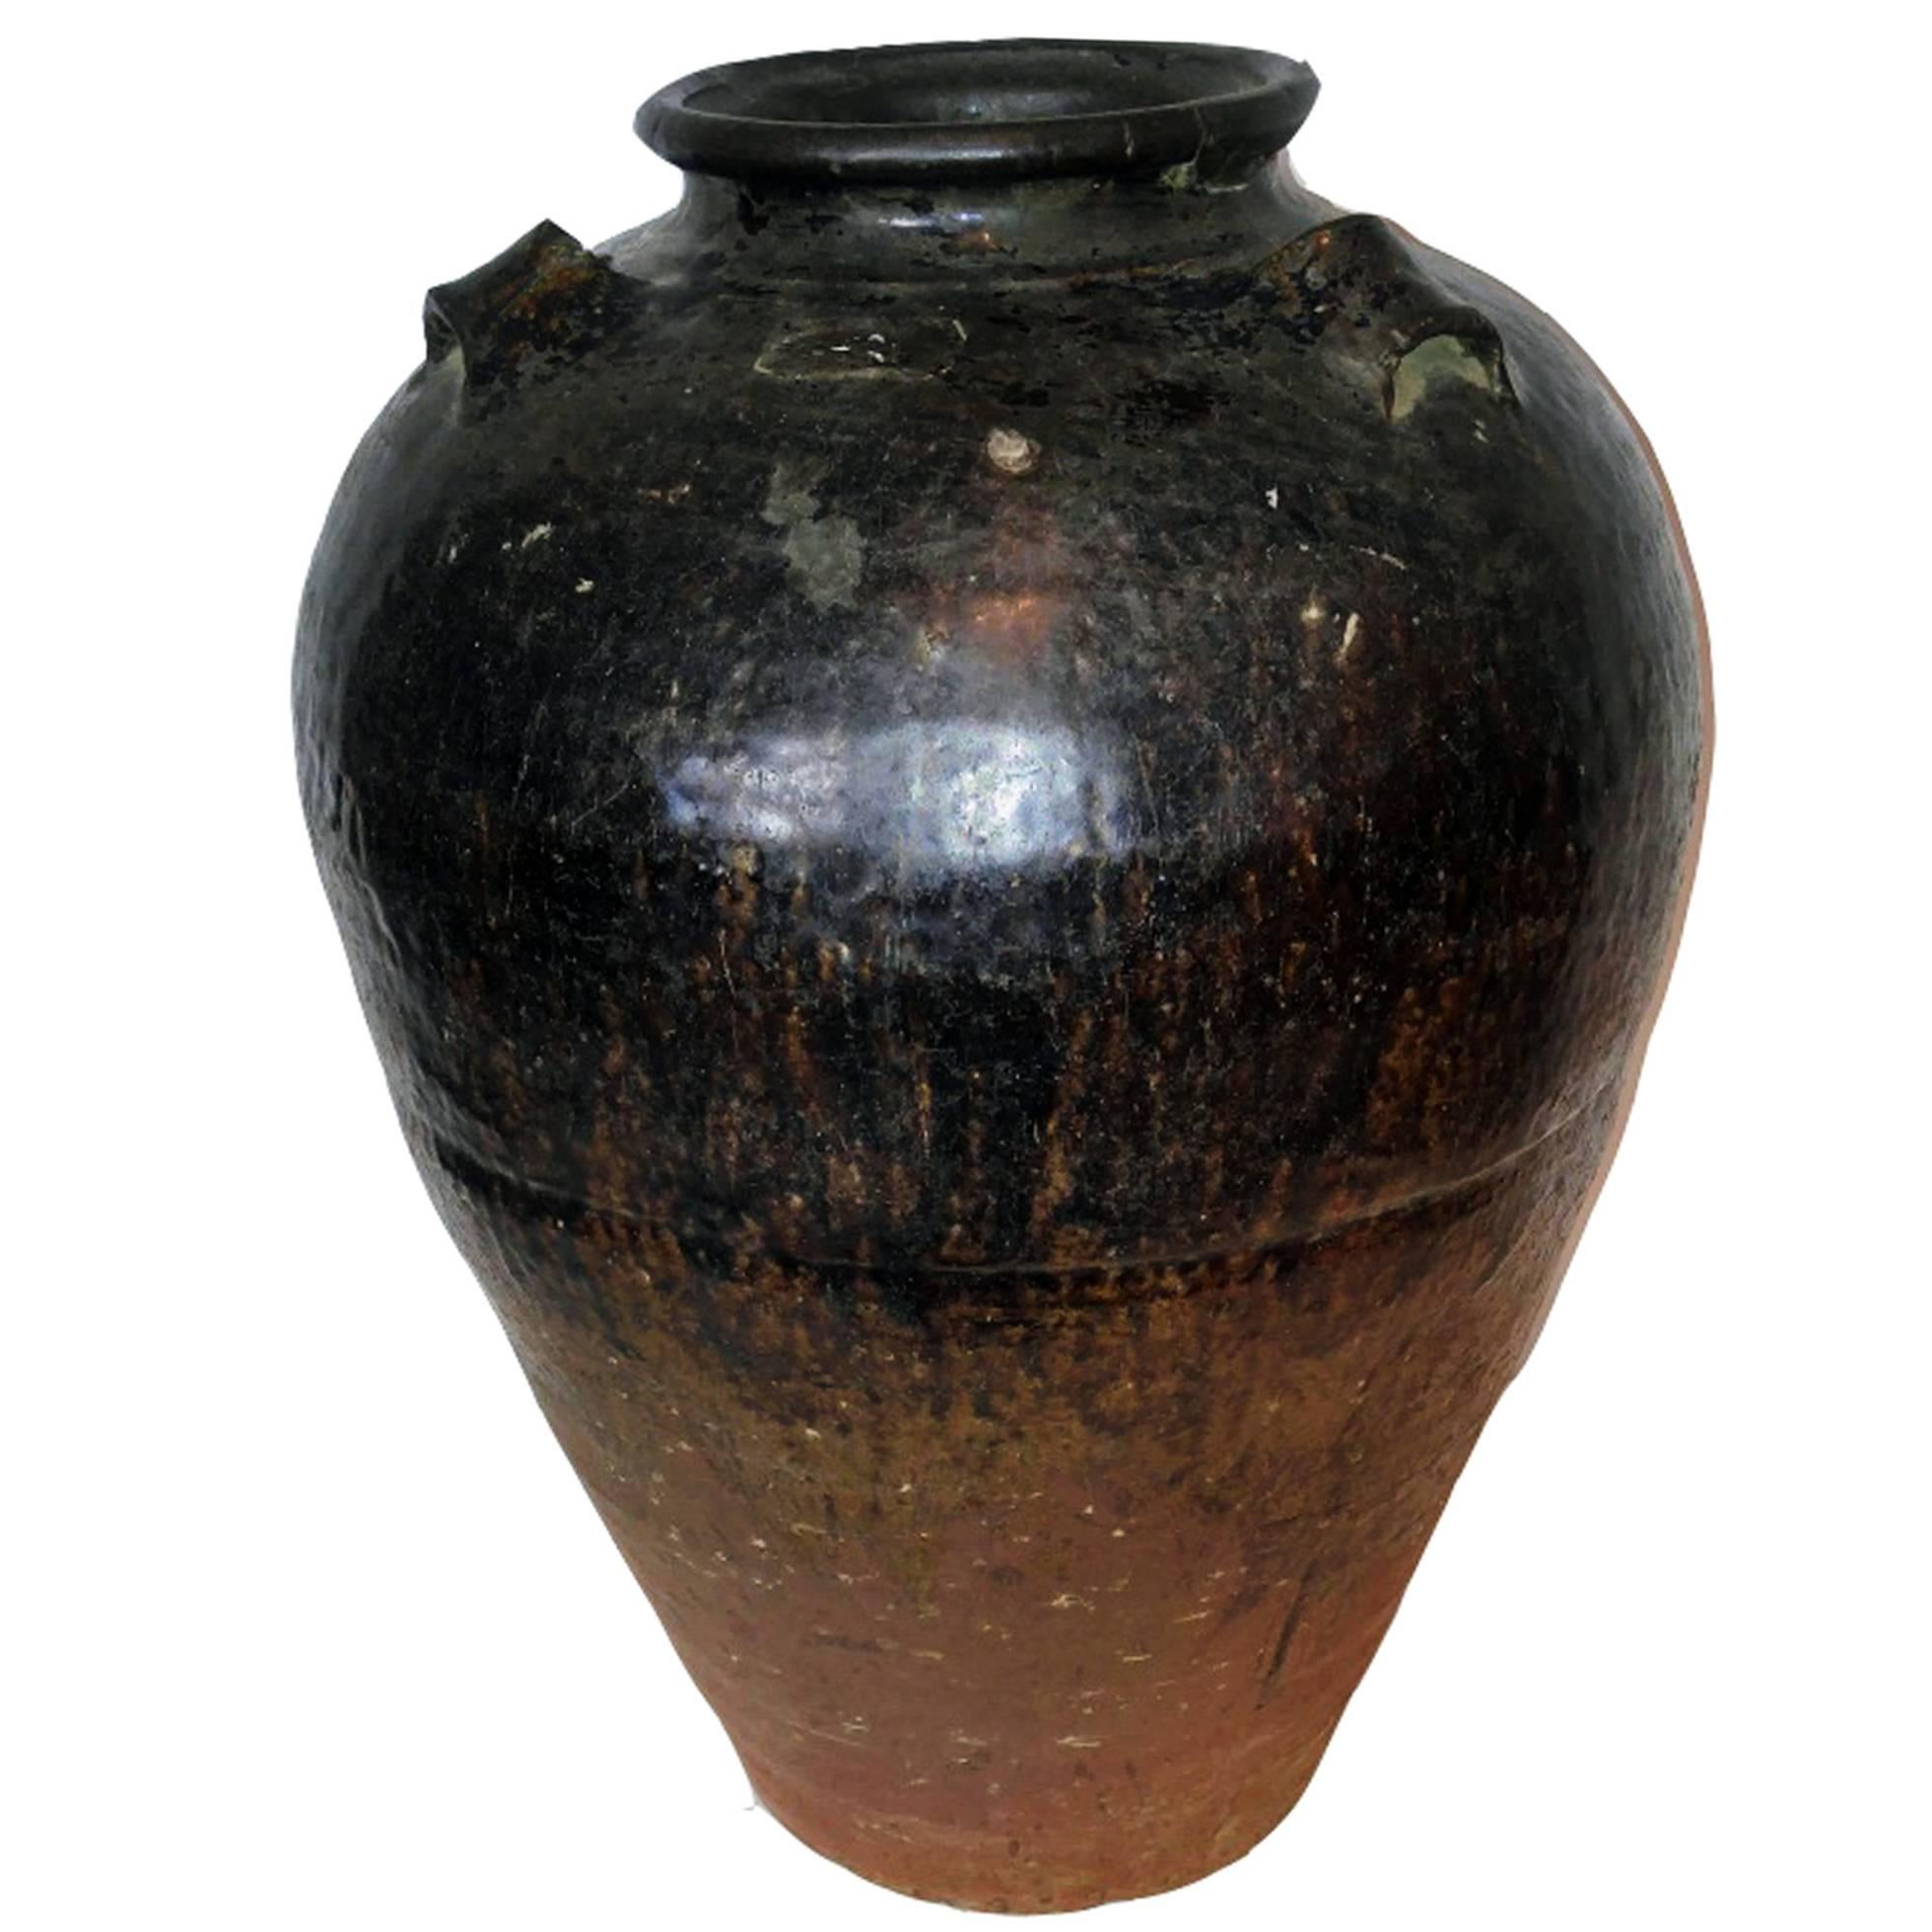 Large Clay Pot or Vase in a Dark Glaze